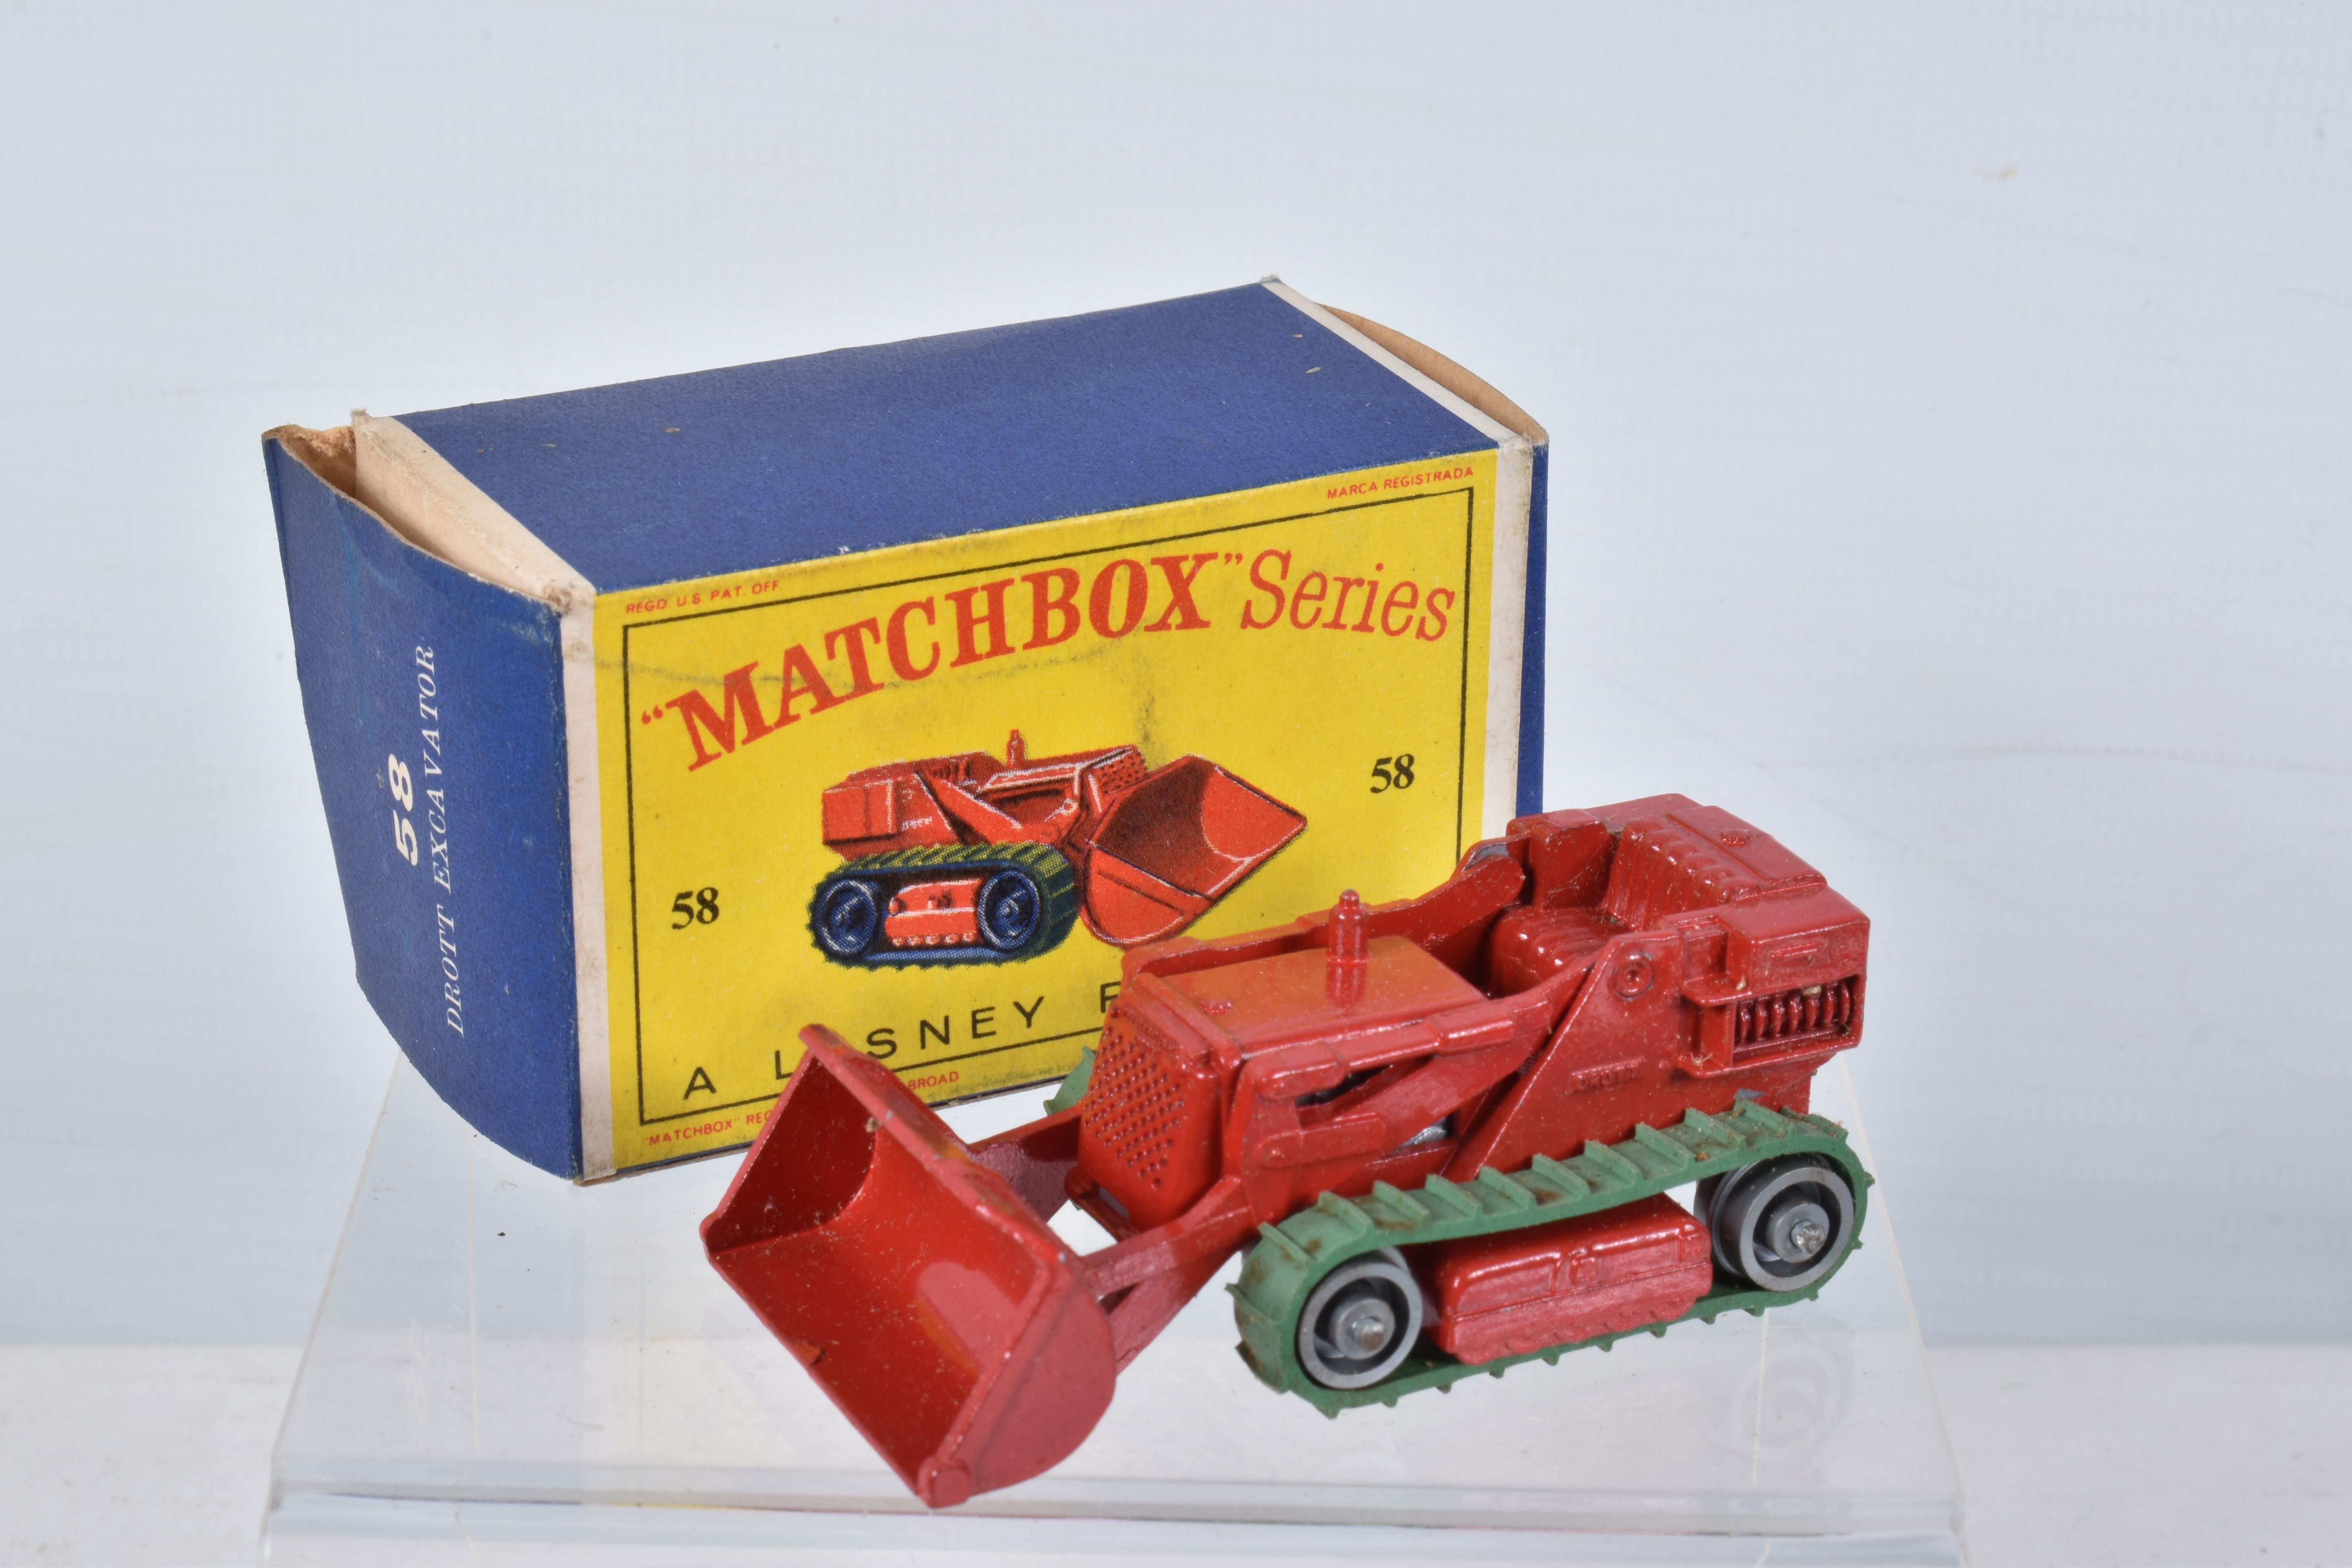 FOUR BOXED MATCHBOX SERIES DIECAST CONSTRUCTION VEHICLES, Caterpillar Bulldozer, No.18, green - Image 20 of 25